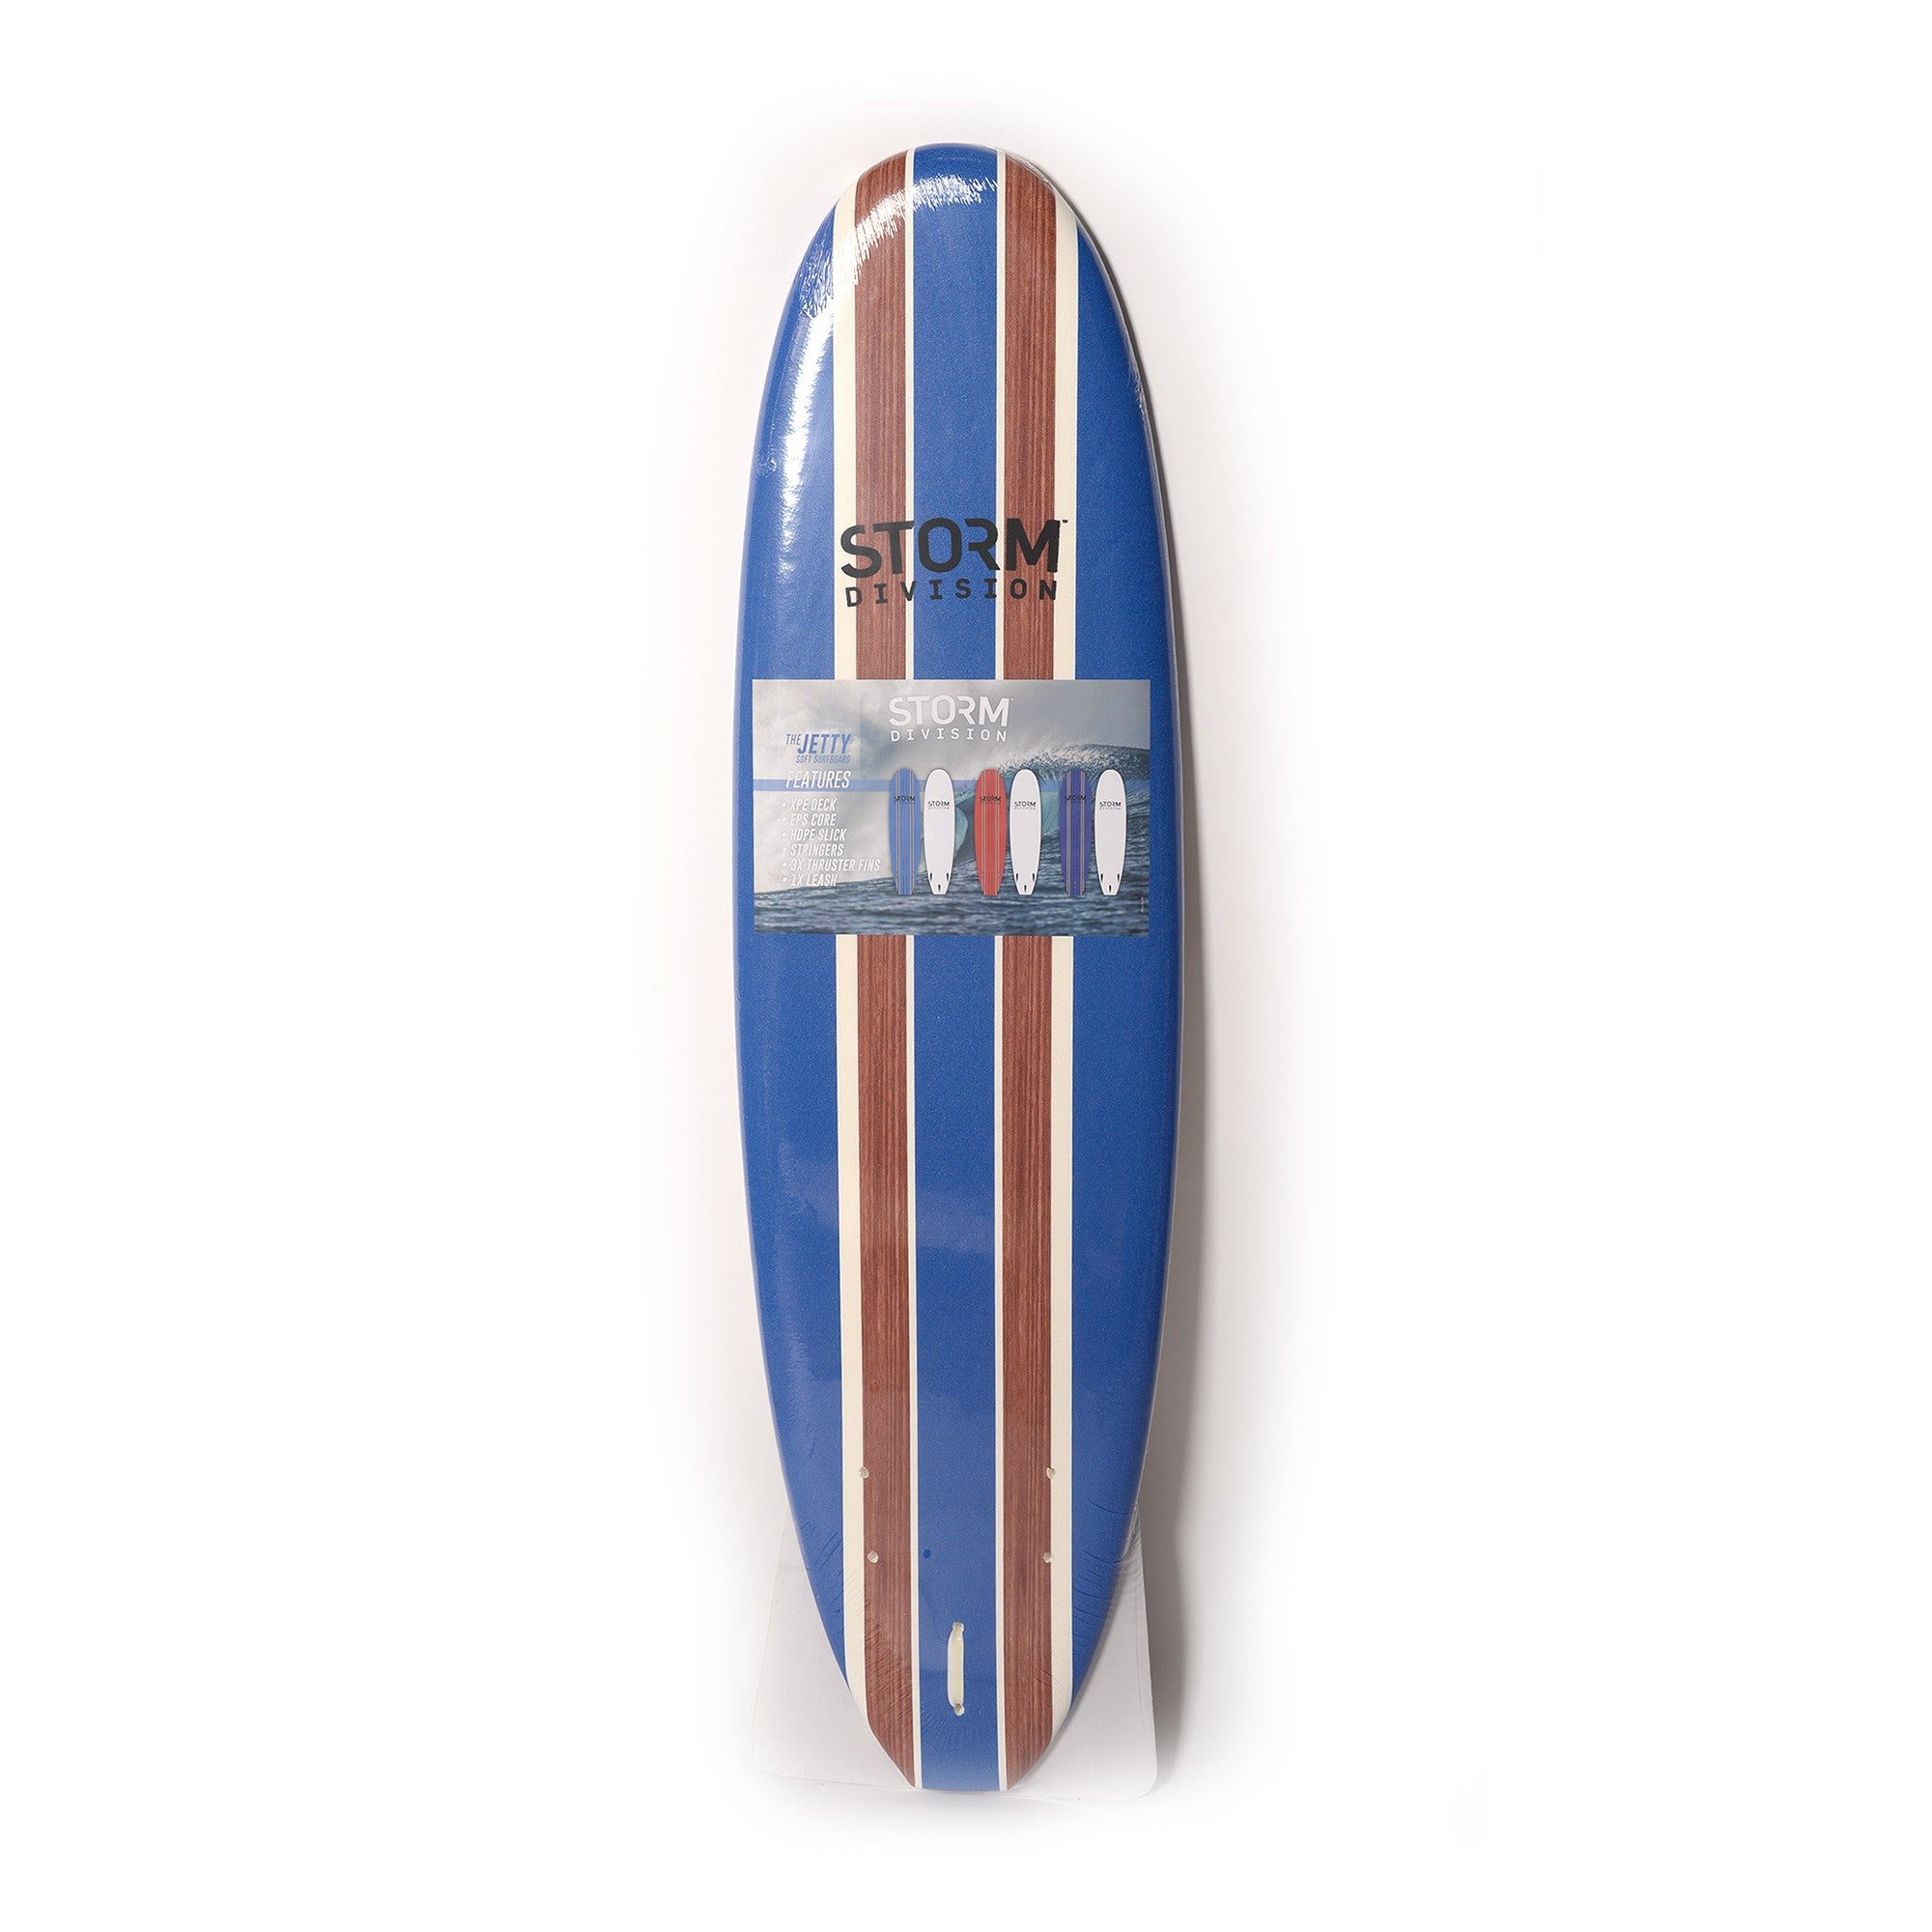 STORM DIVISION - Jetty Softboard - Foam Surfboard - 6'2 - Dark blue